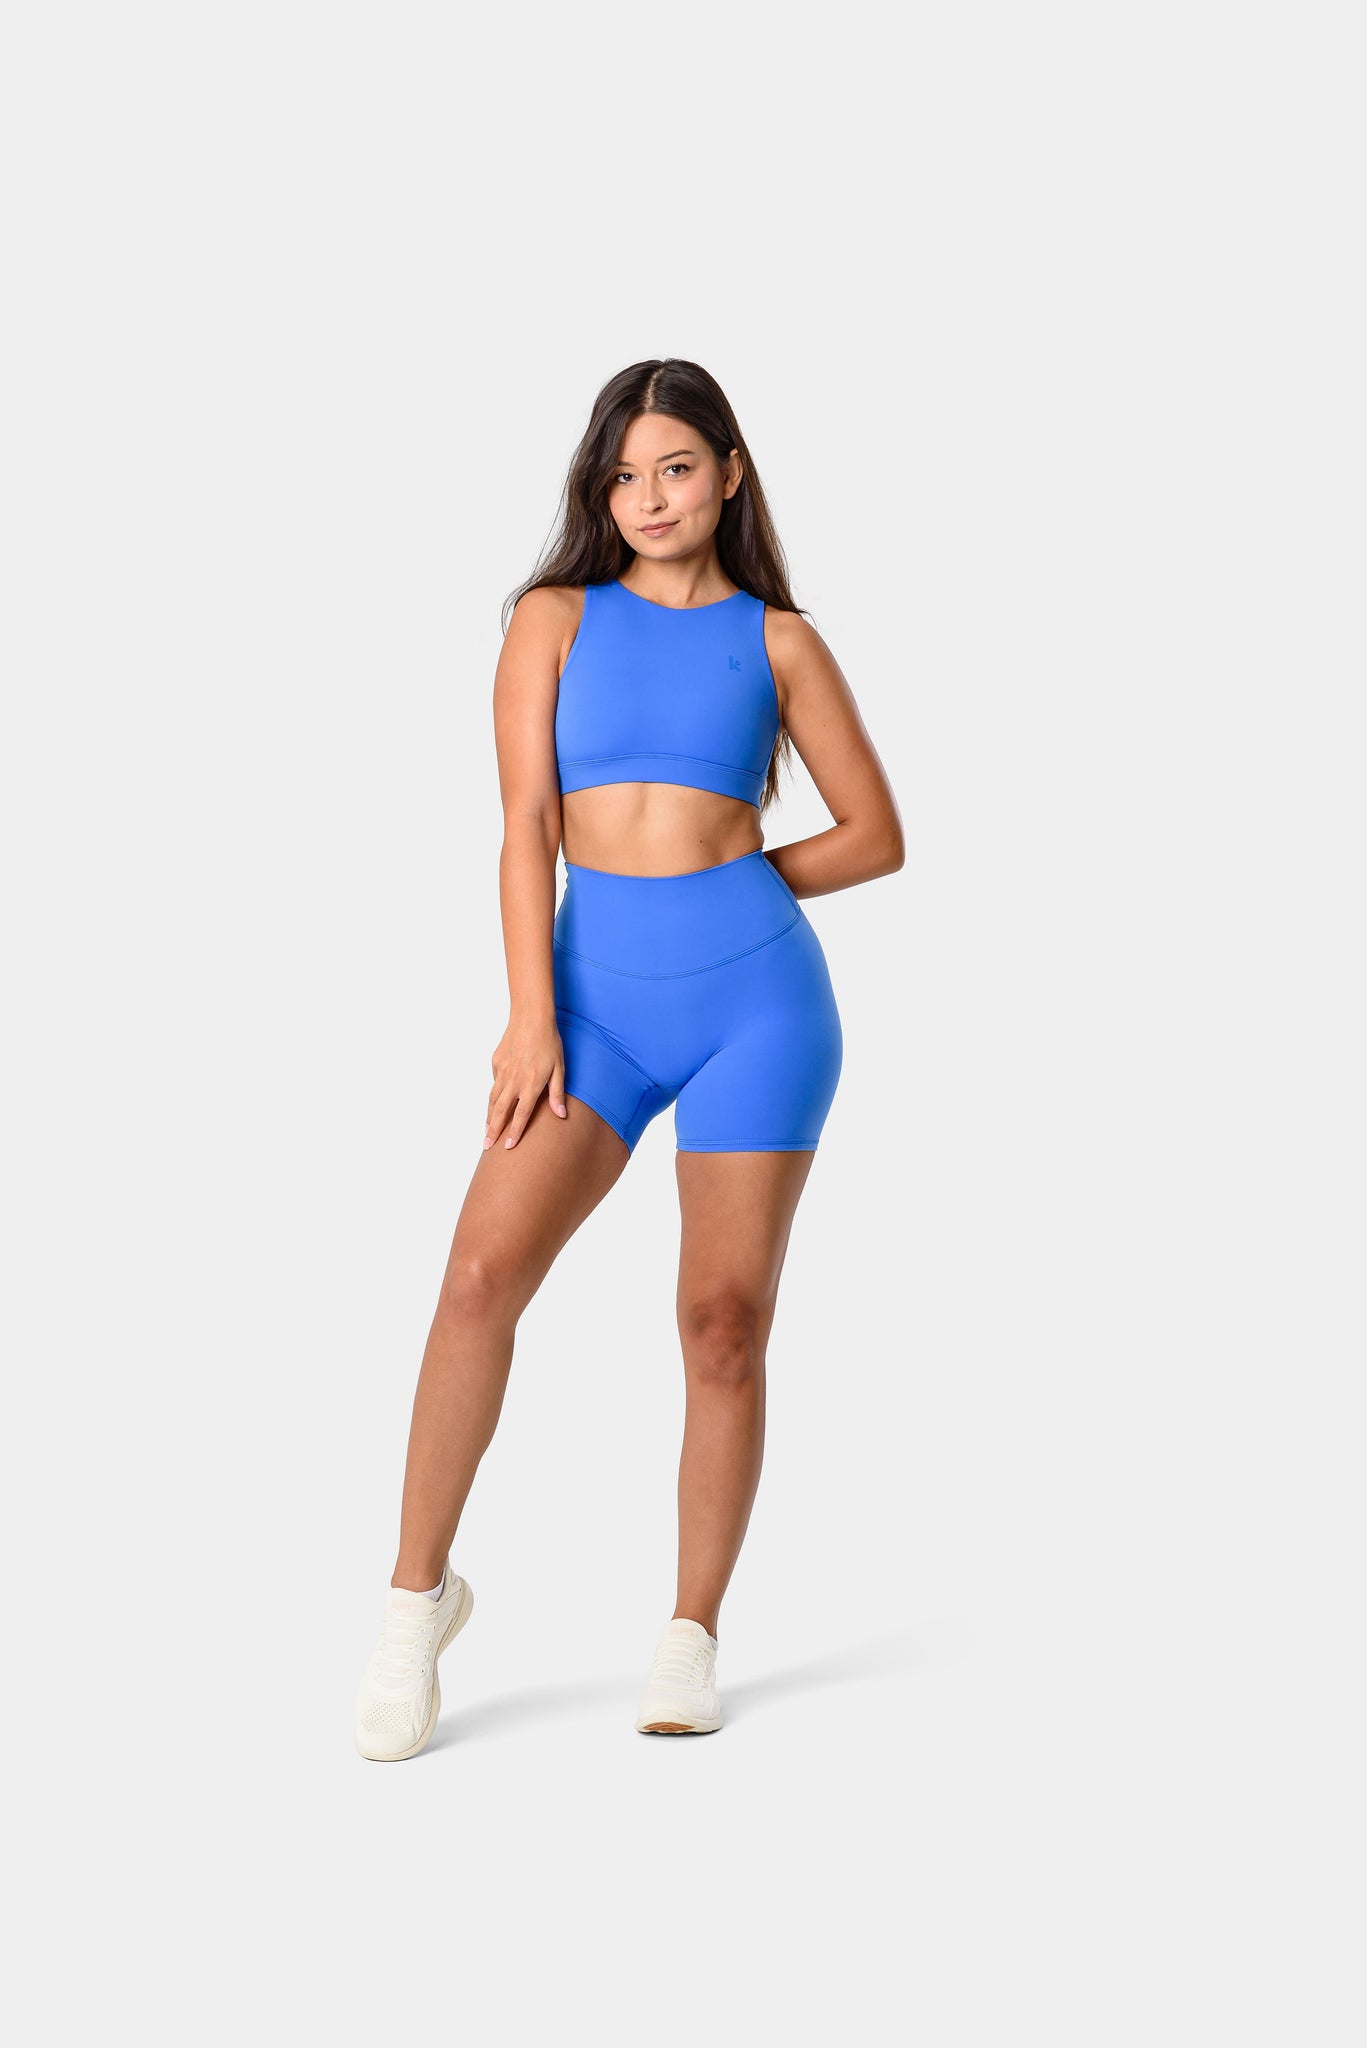 FeatherLite Enhance 6" Shorts - Strong Blue